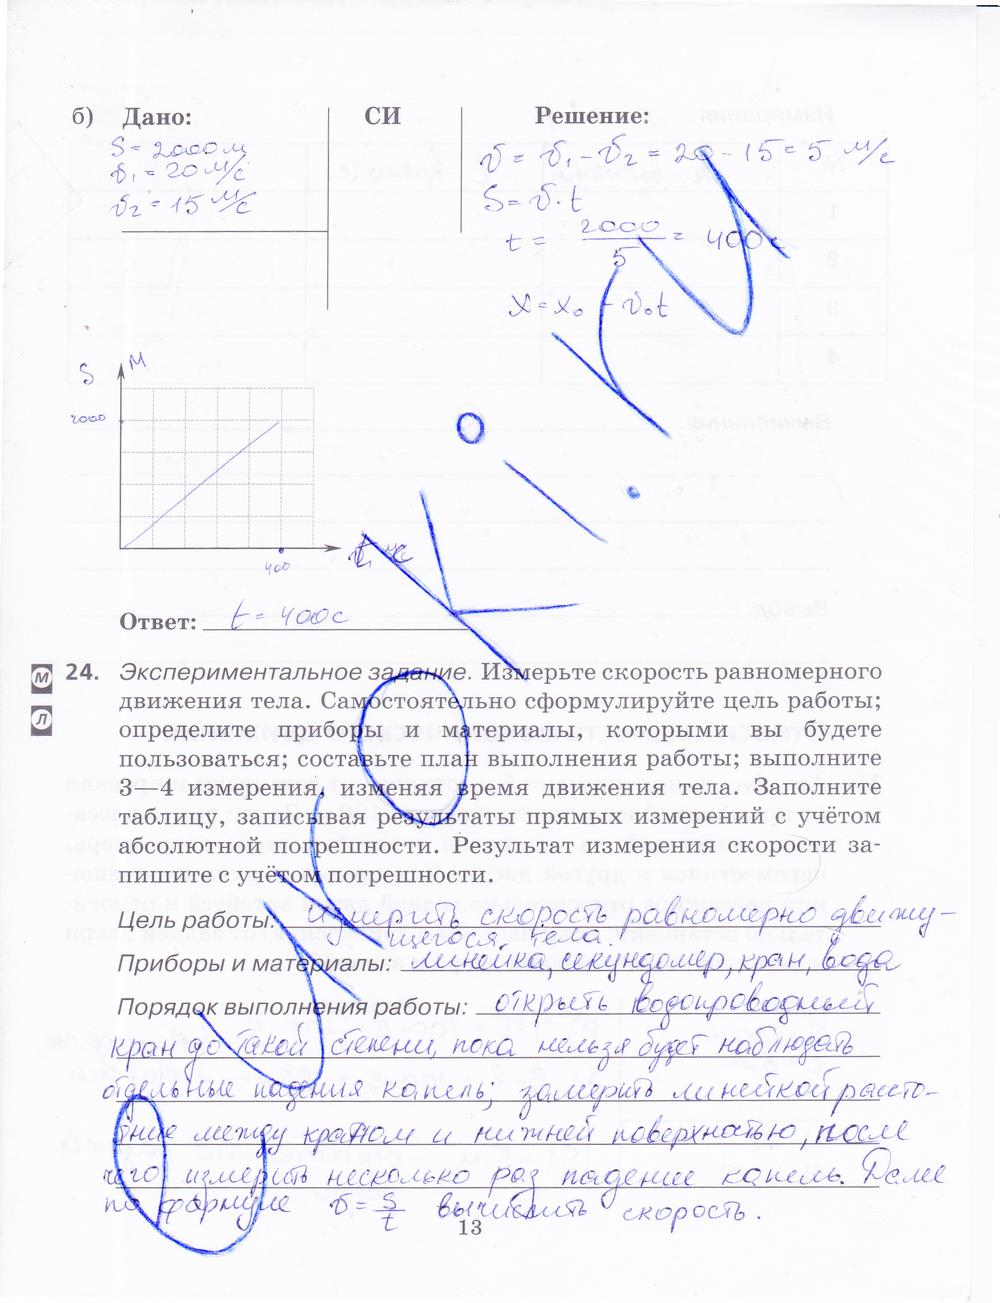 гдз 9 класс рабочая тетрадь страница 13 физика Пурышева, Важеевская, Чаругин